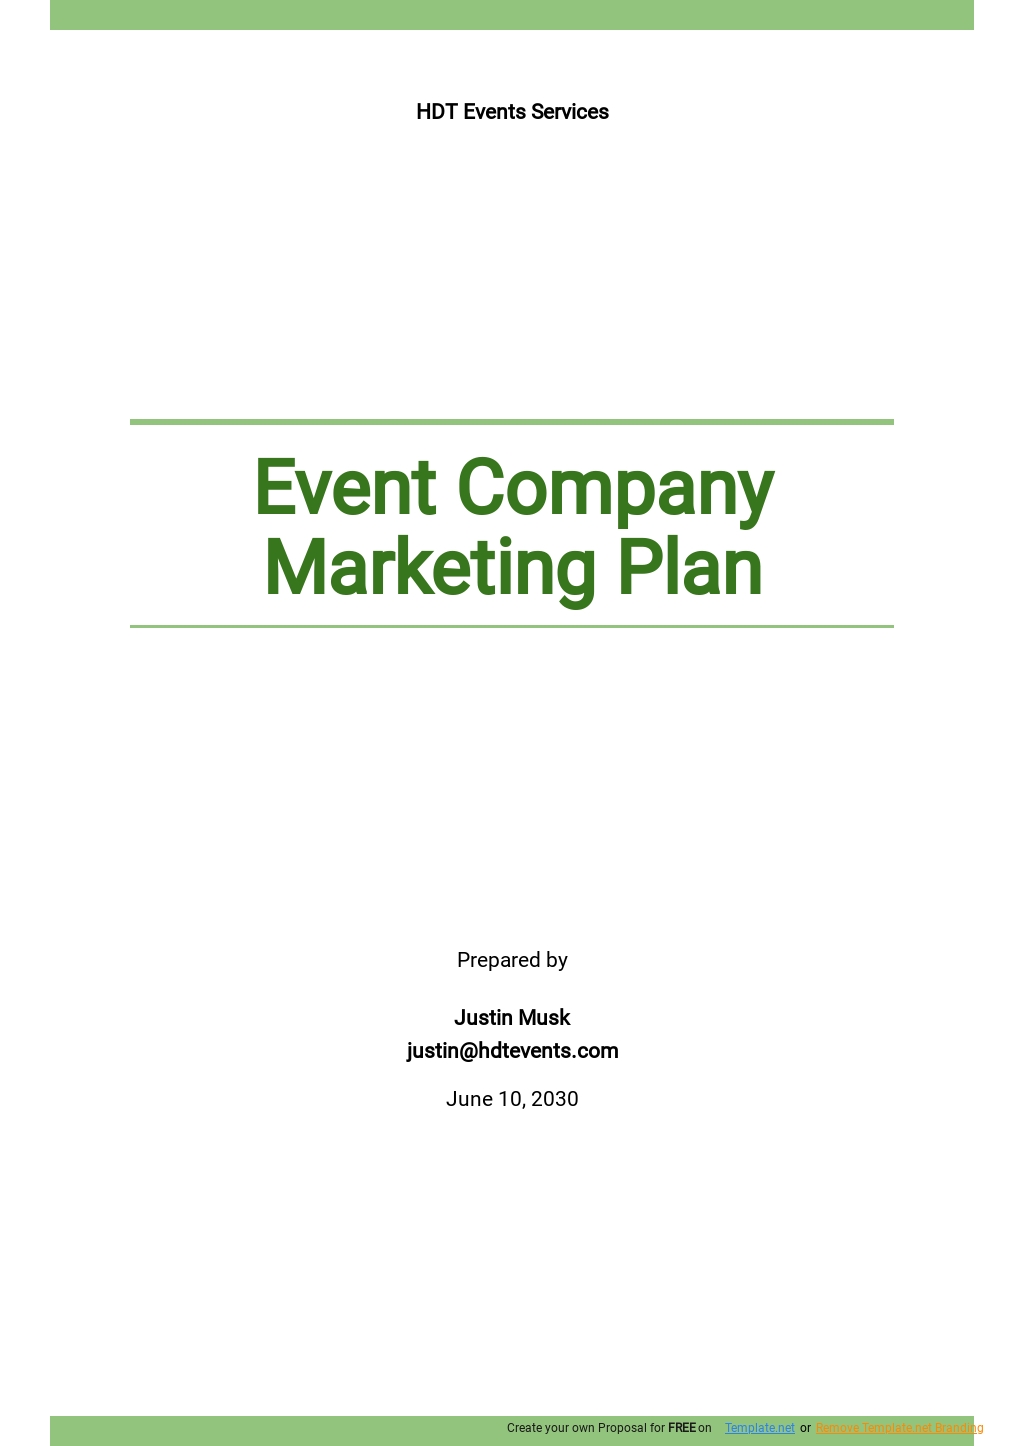 Event Company Marketing Plan Template